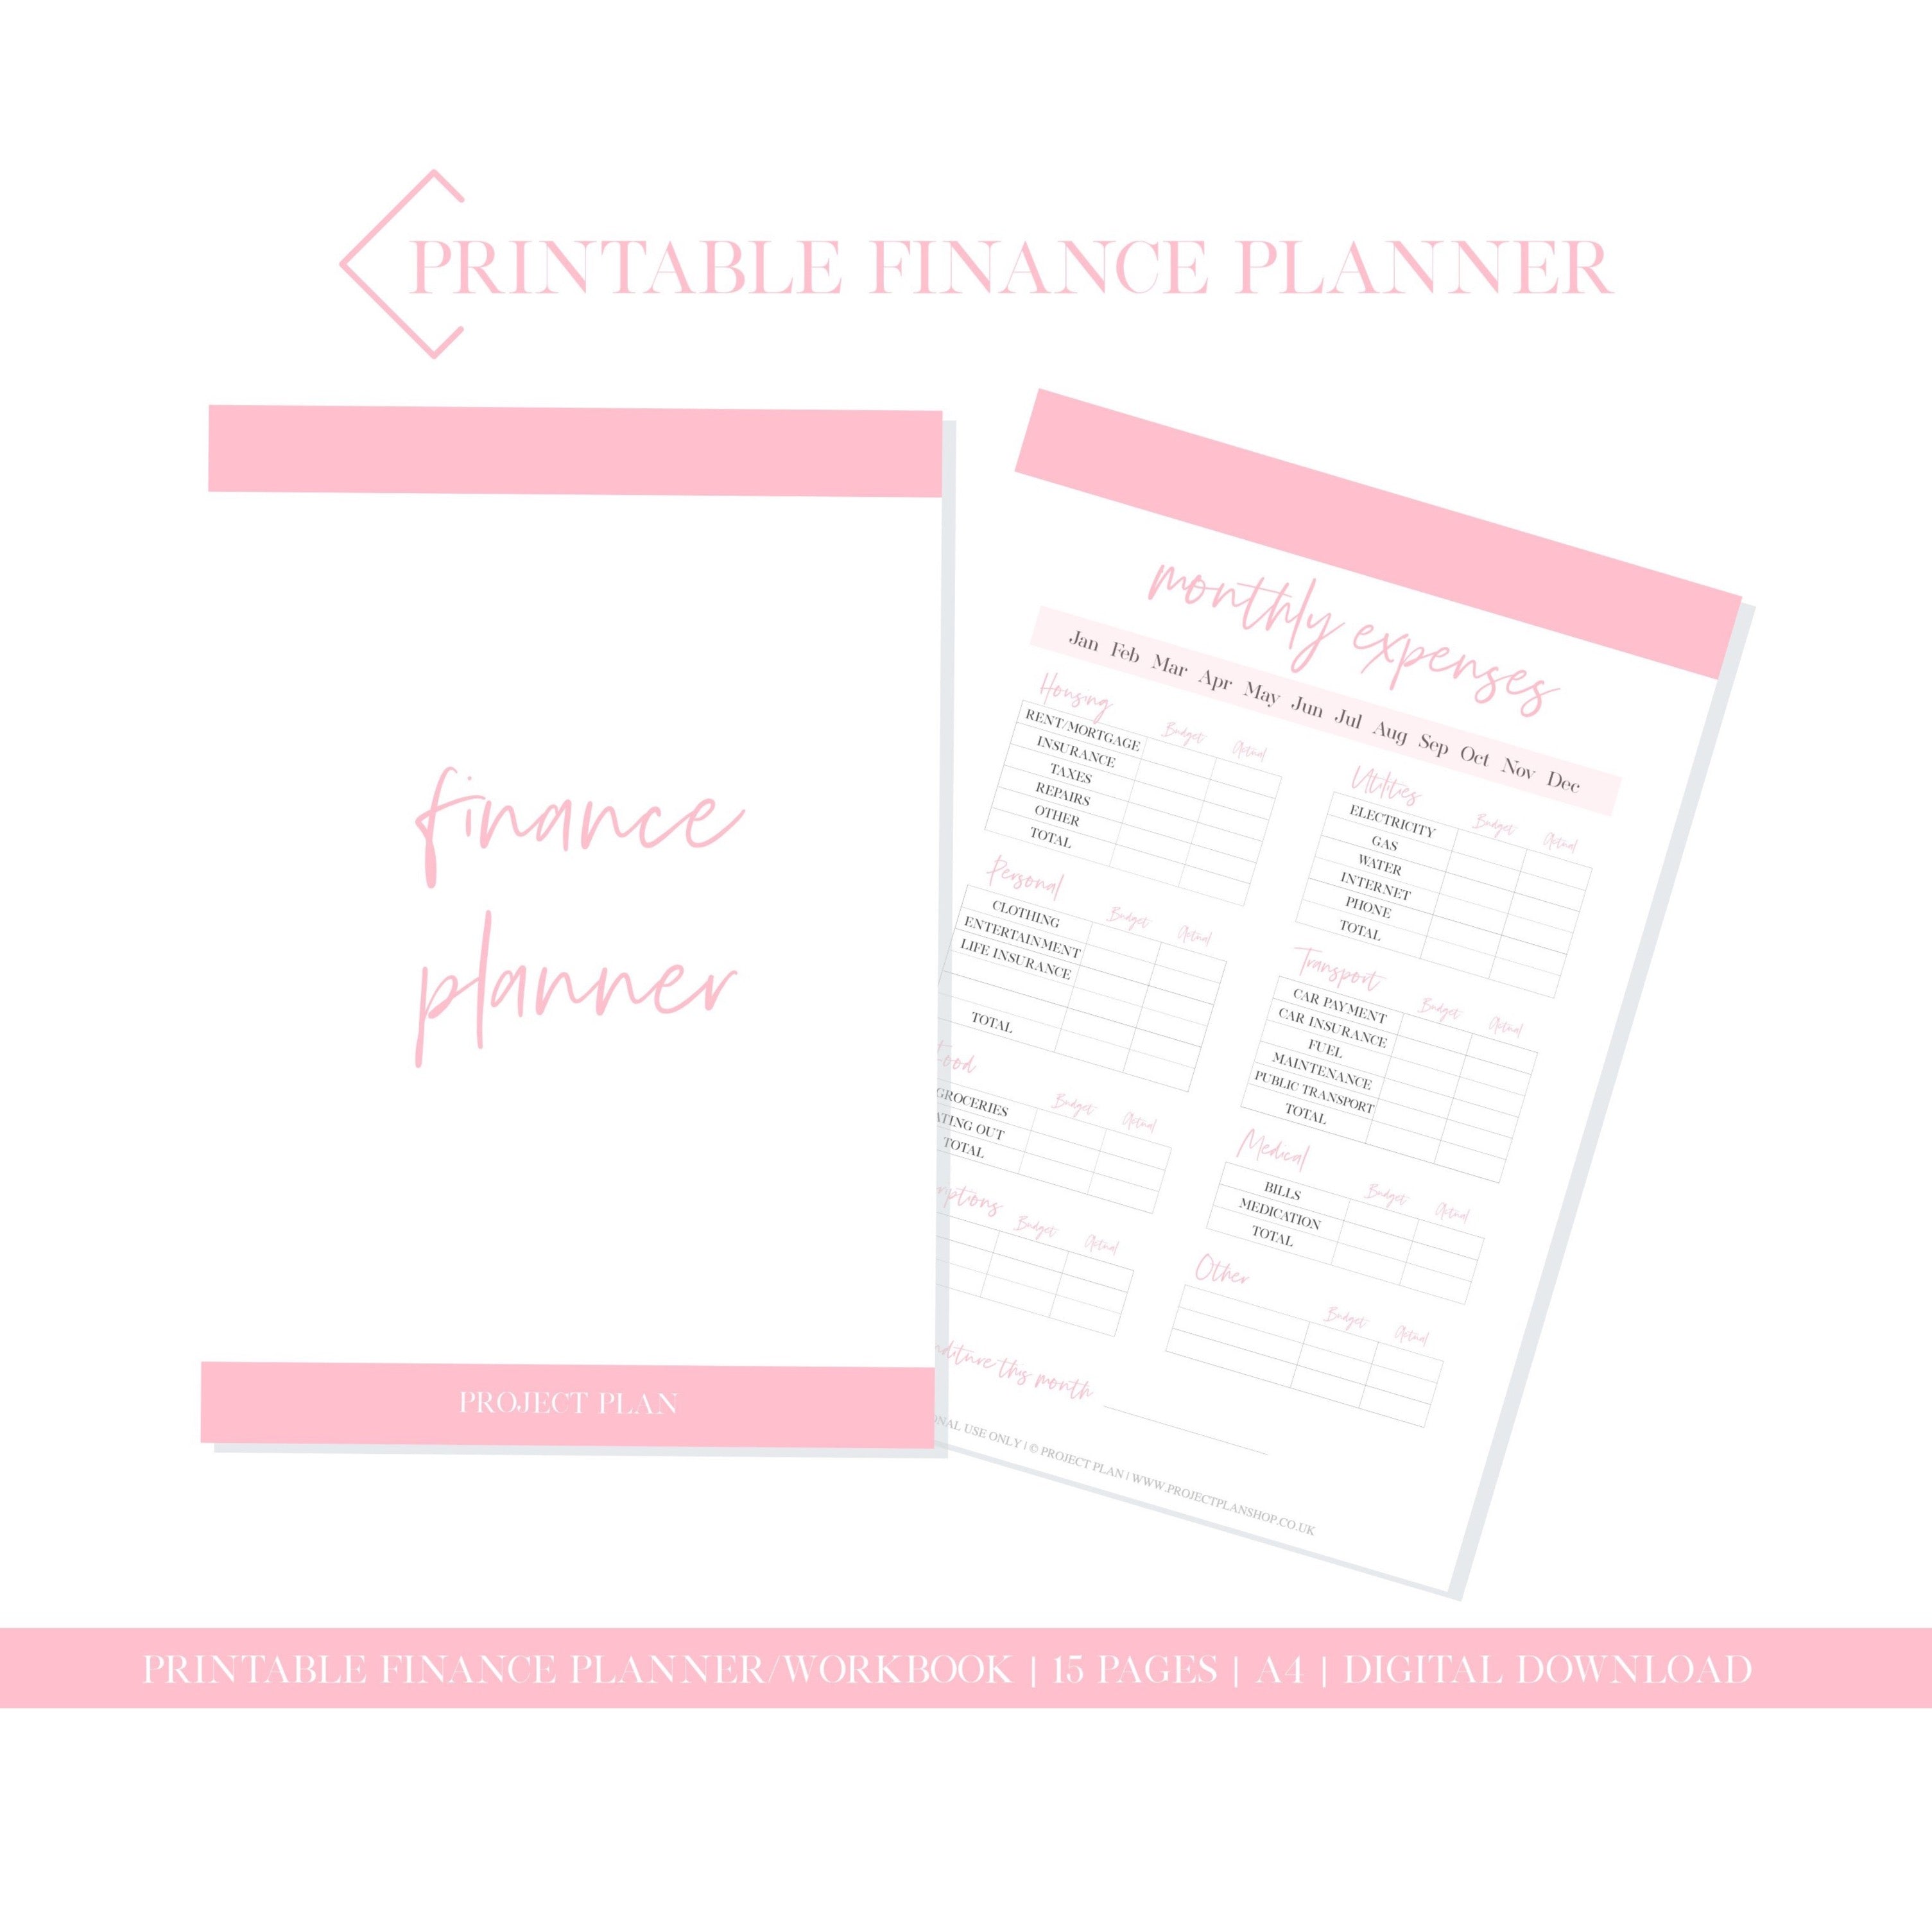 Printable Finance Planner/Workbook